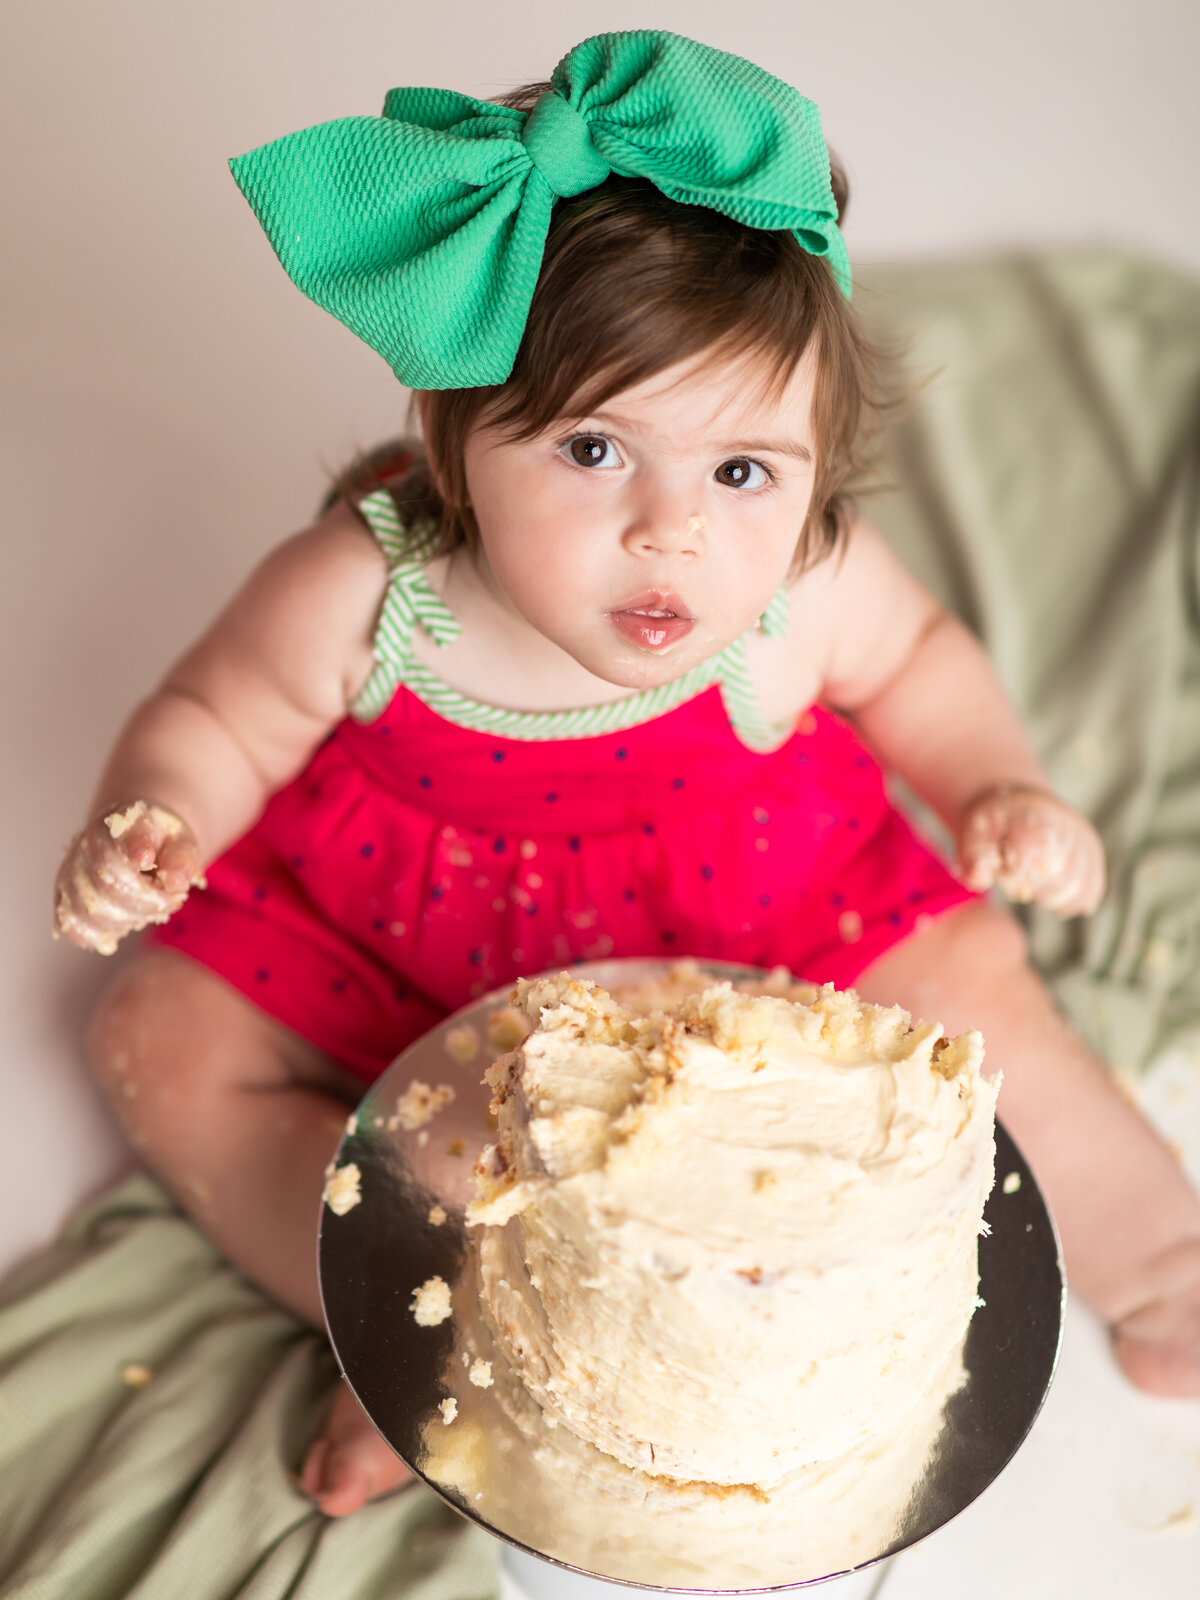 watermelon theme cake smash for girl's first birthday